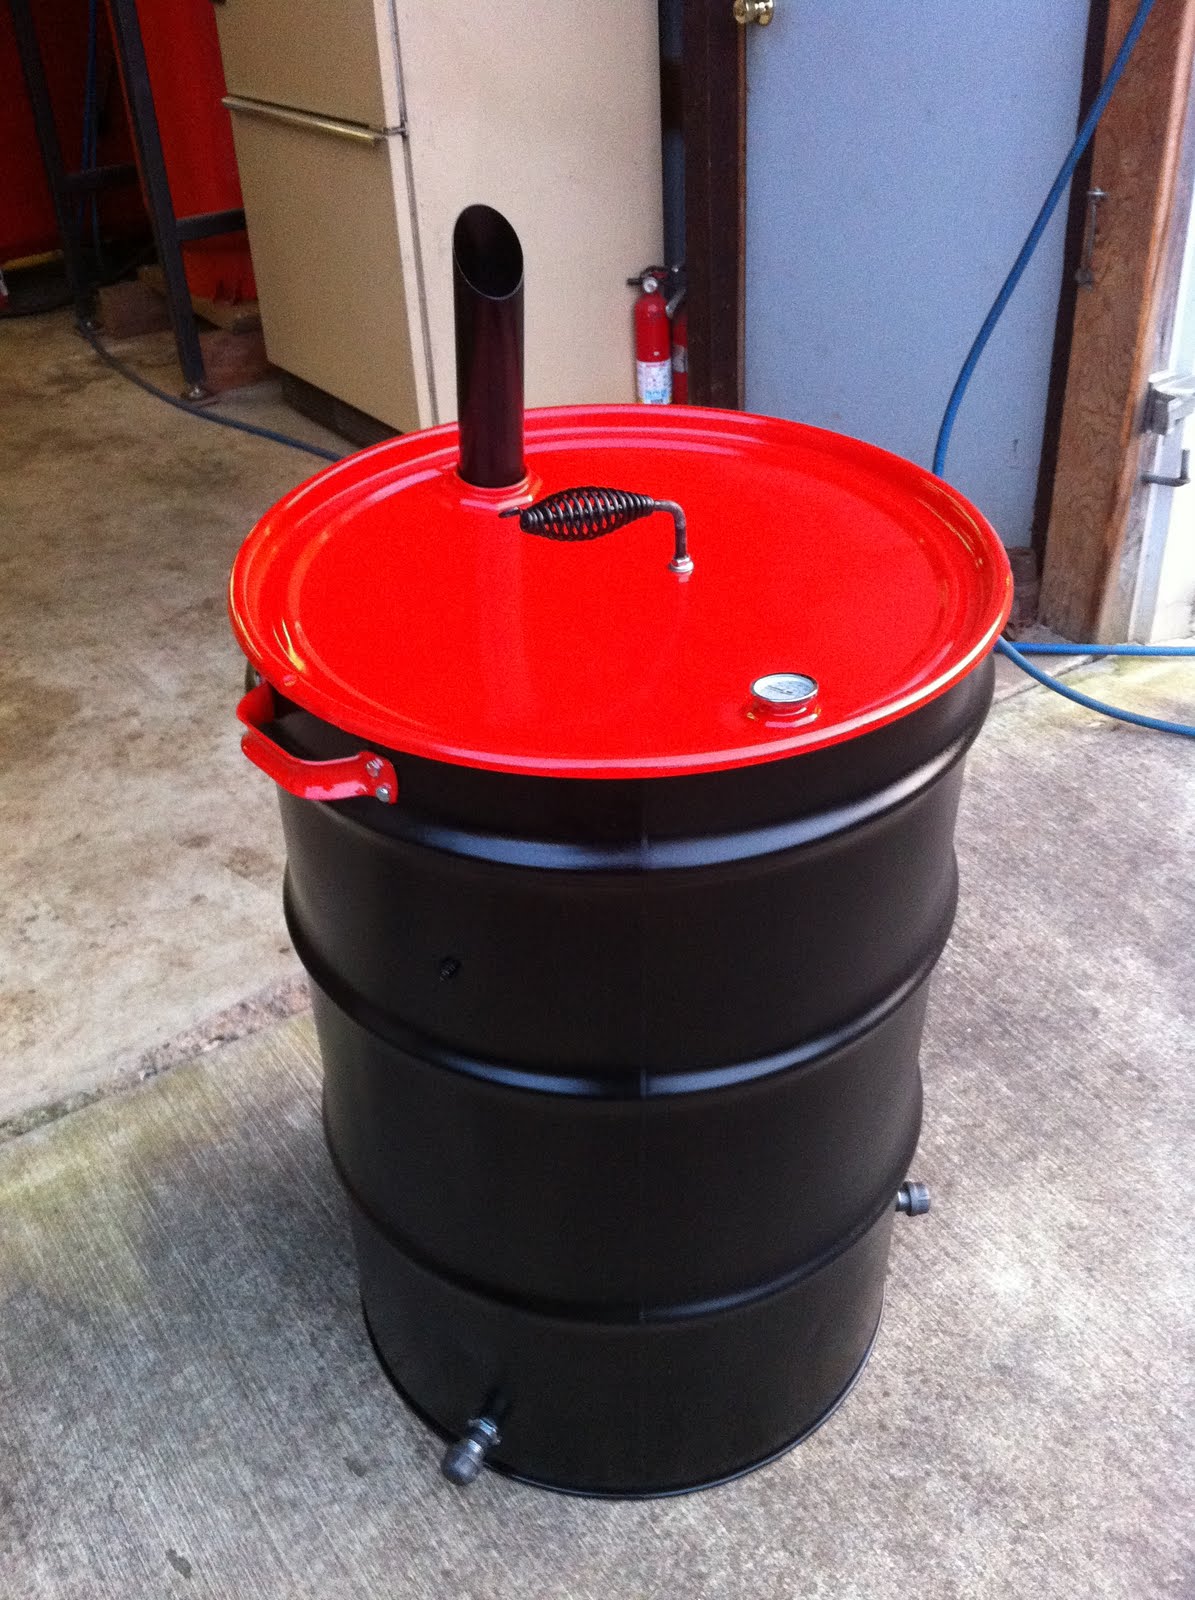 Barrel Project Photo's - 55 gallon plastic drum projects - 55 gallon 